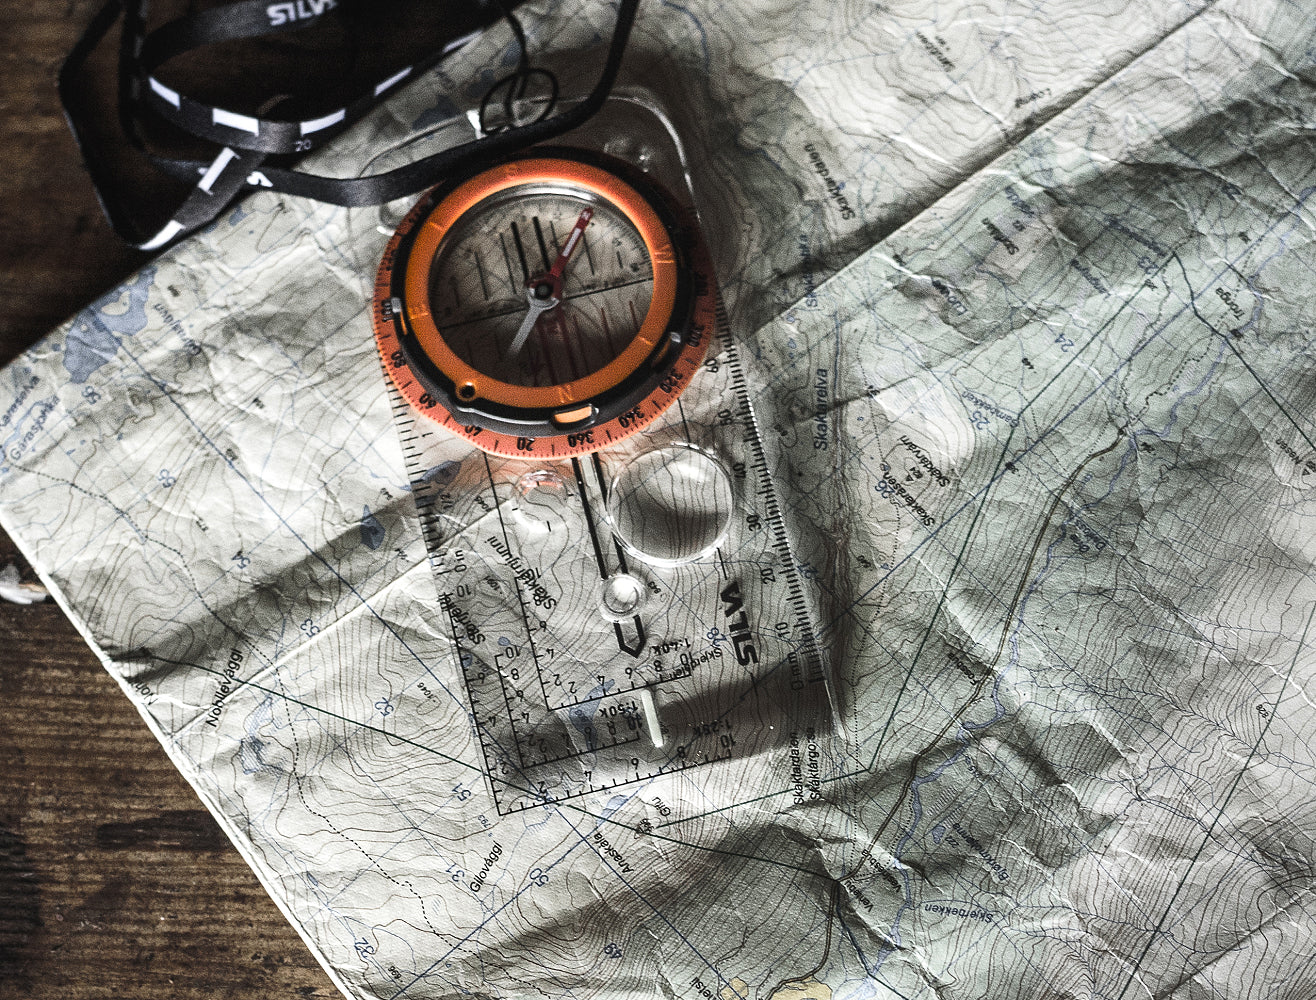 Silva Explorer PRO Compass - on the map application